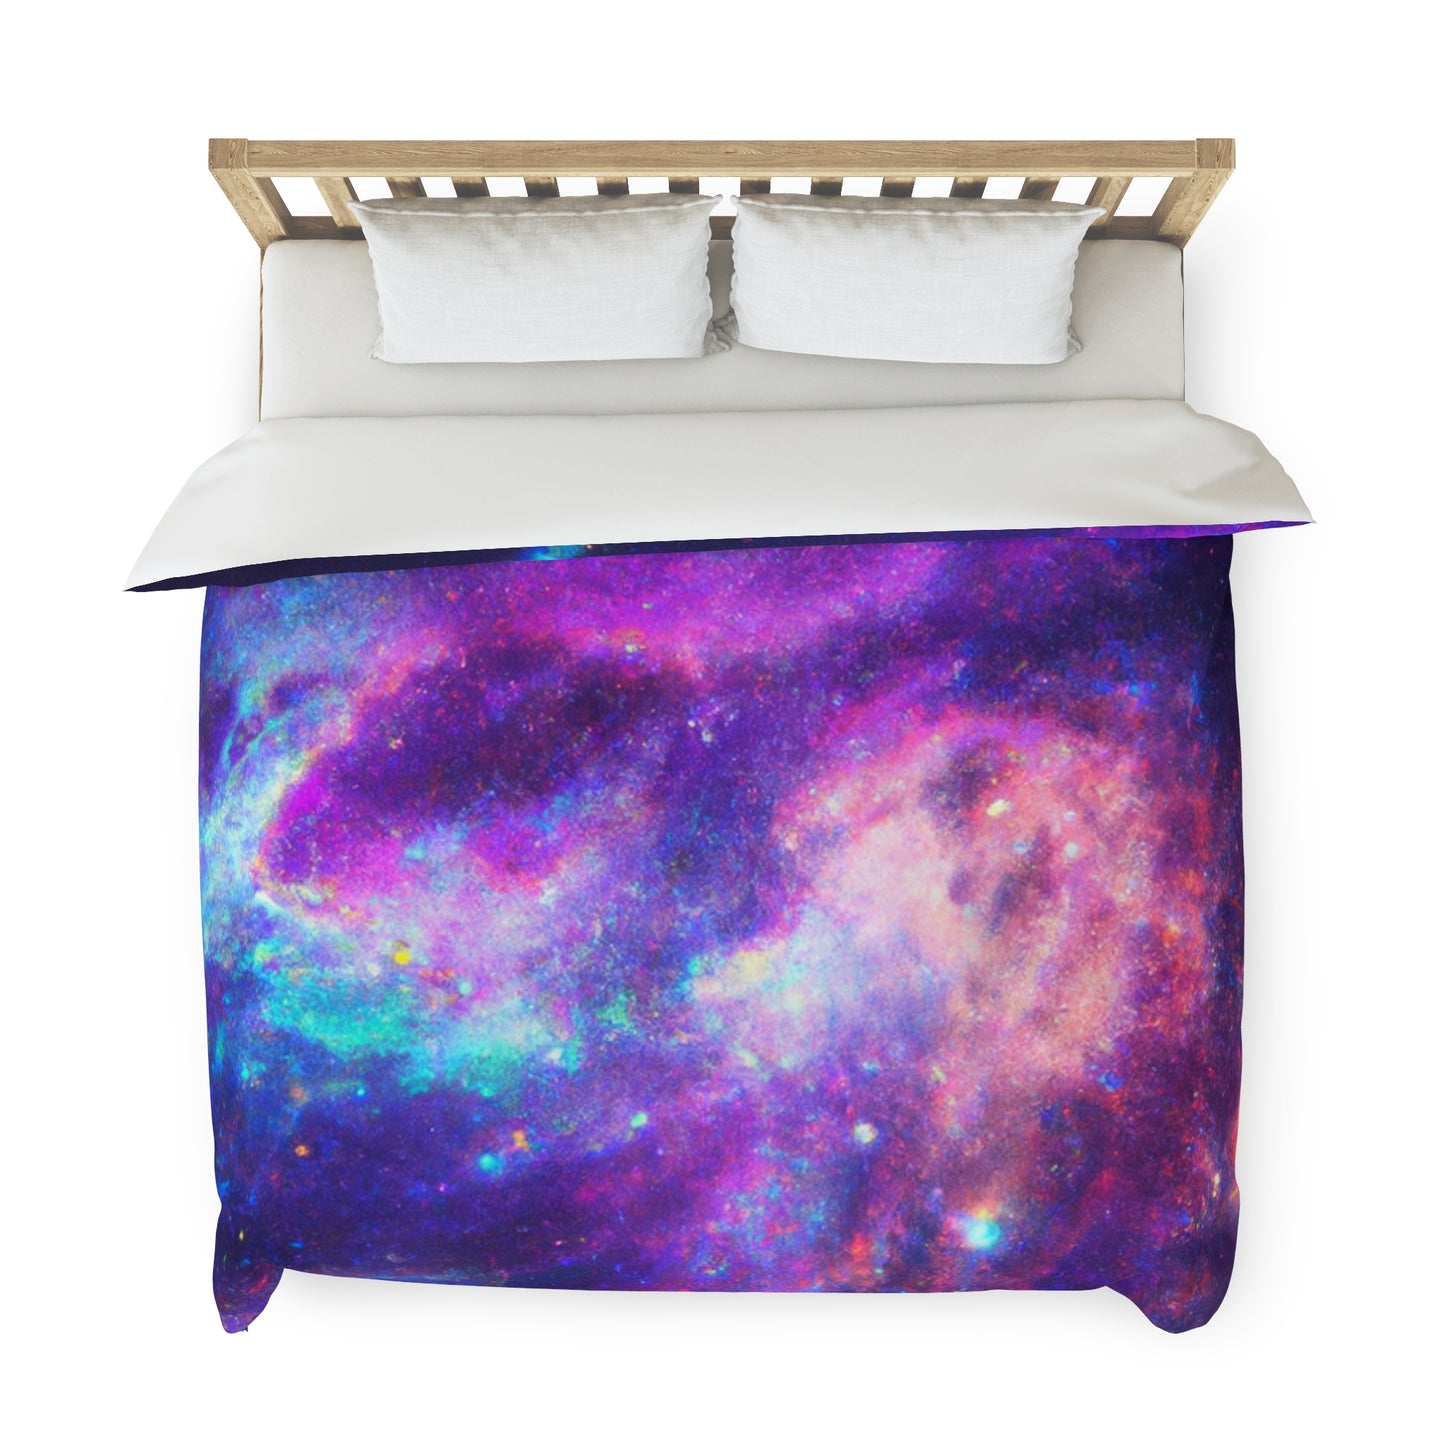 DreamCatcher Moonsoar - Astronomy Duvet Bed Cover